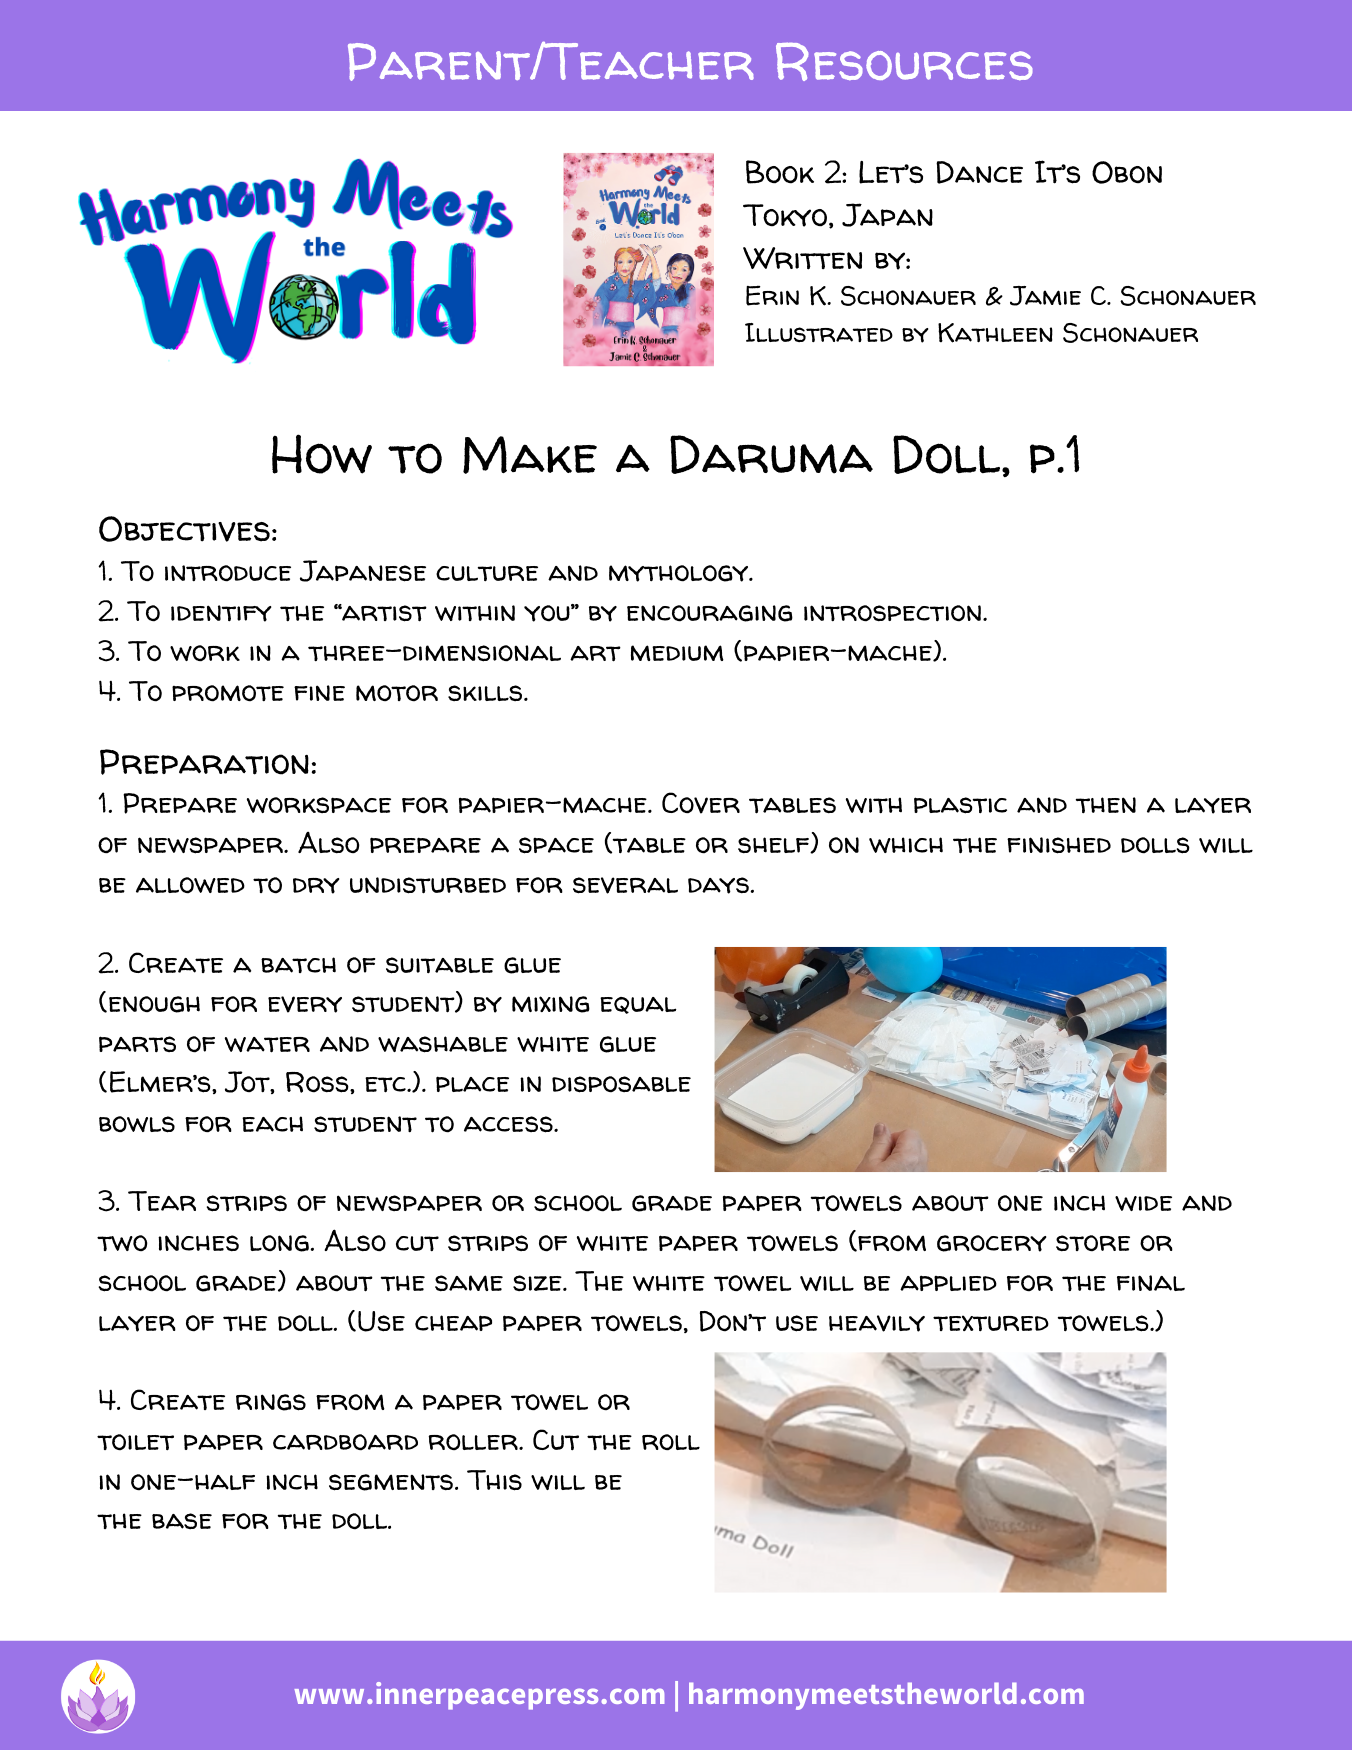 Making a Daruma Doll